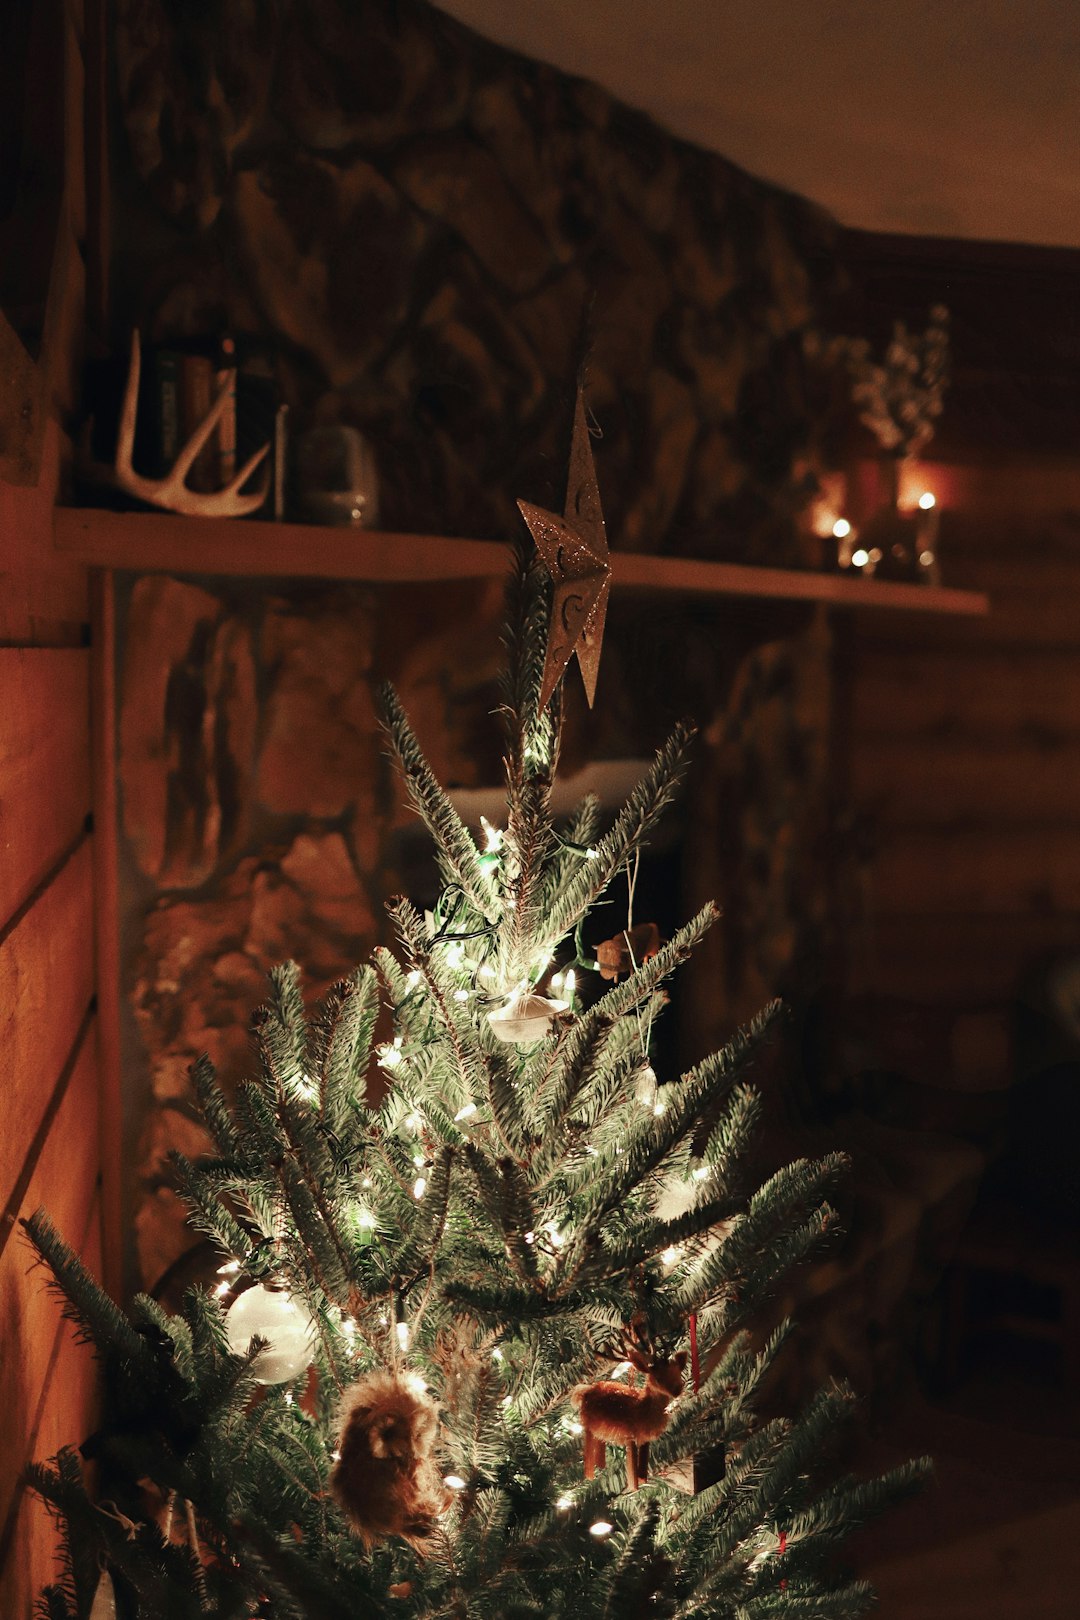 lit Christmas tree